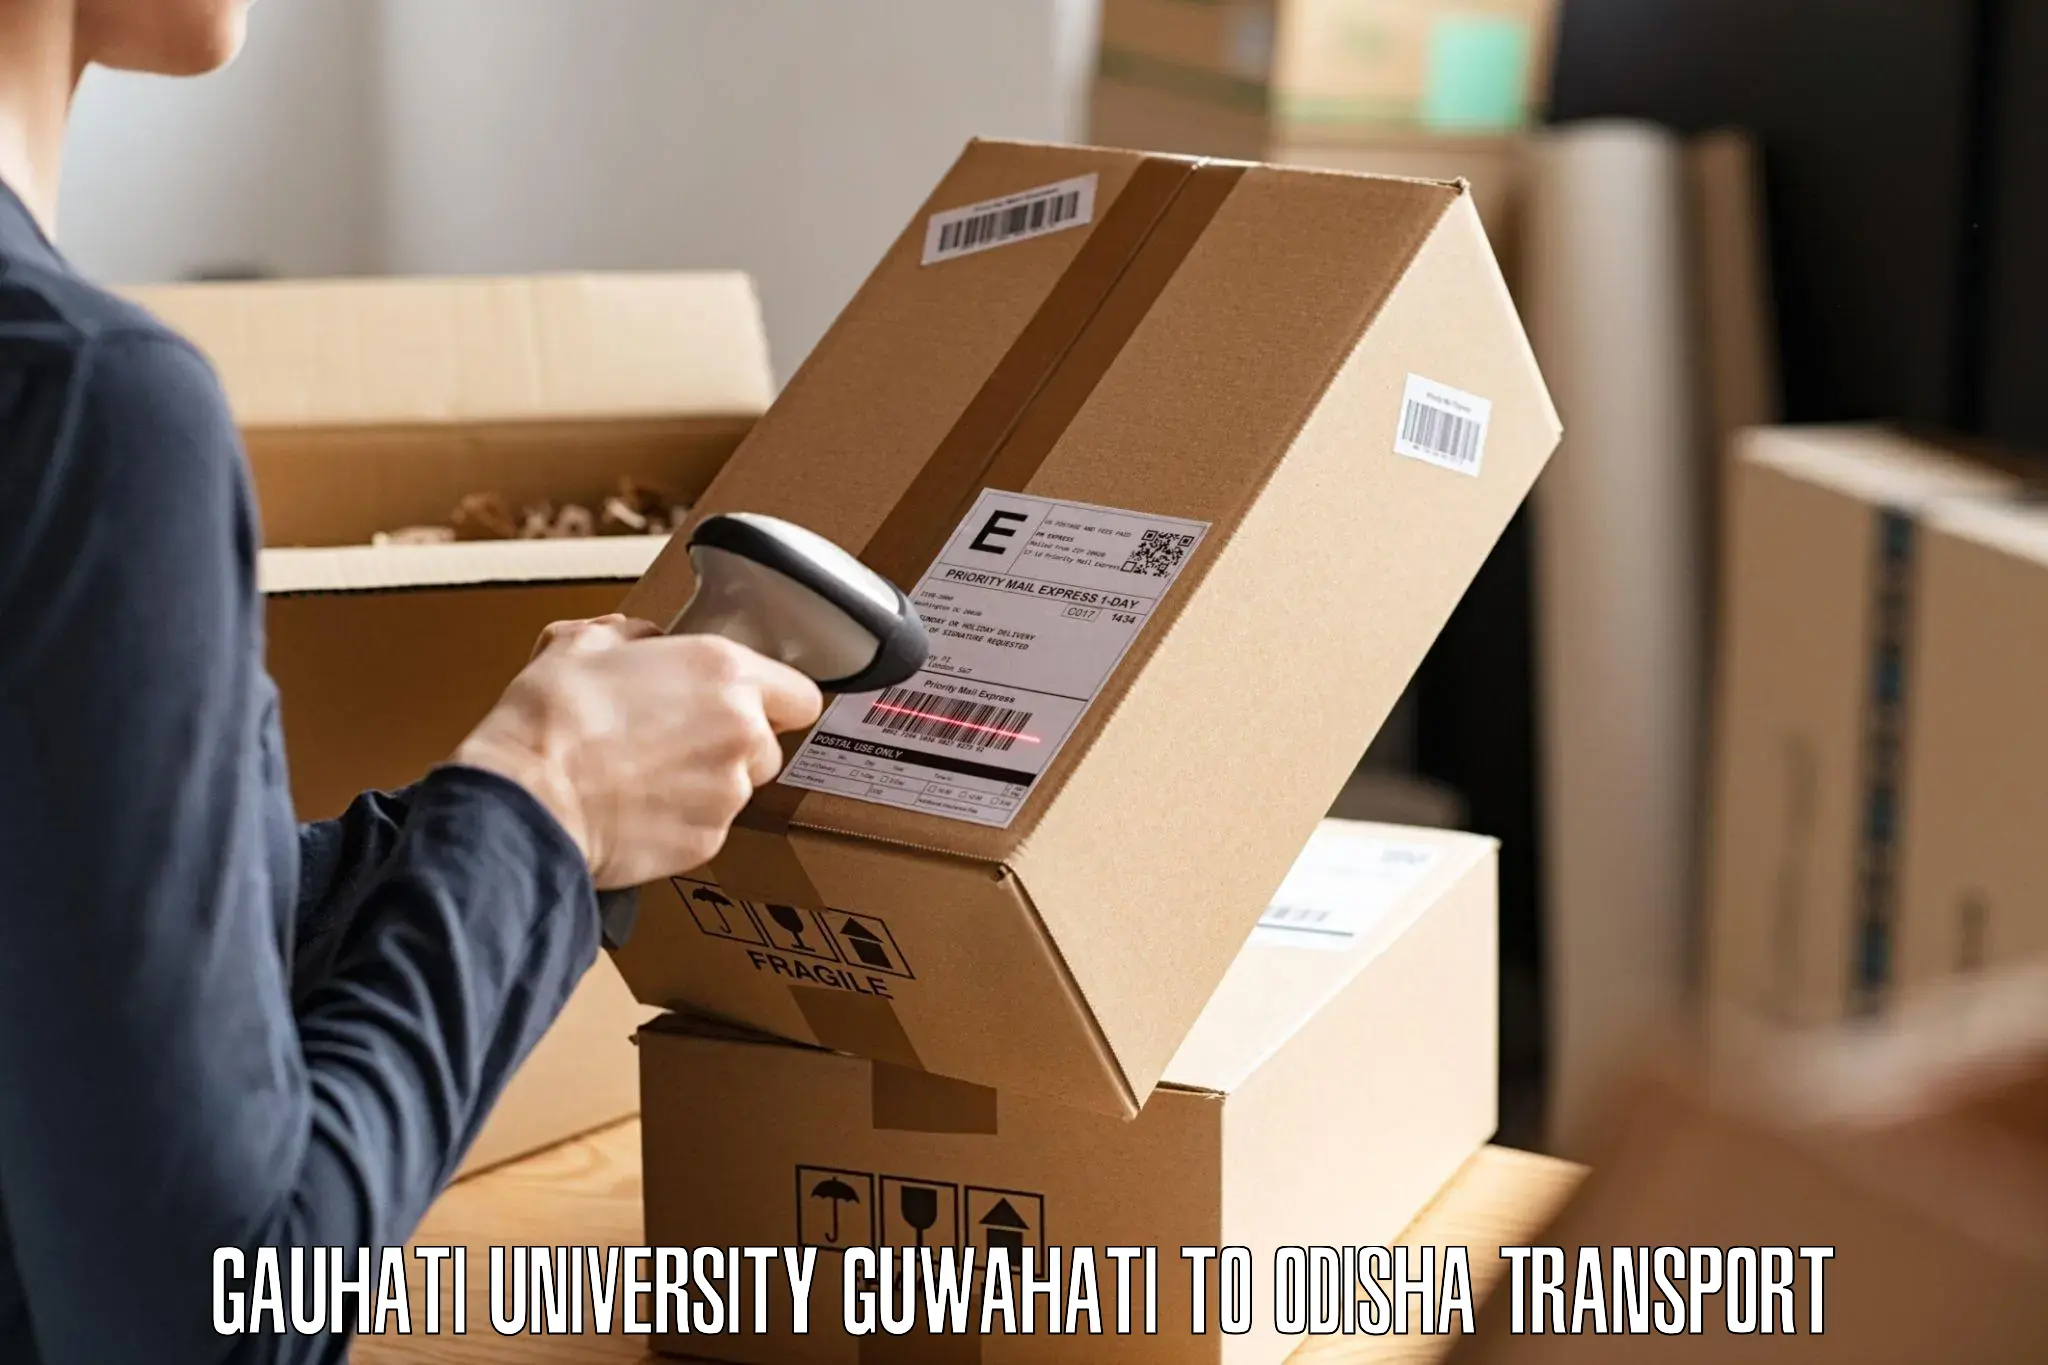 Daily transport service Gauhati University Guwahati to Pallahara